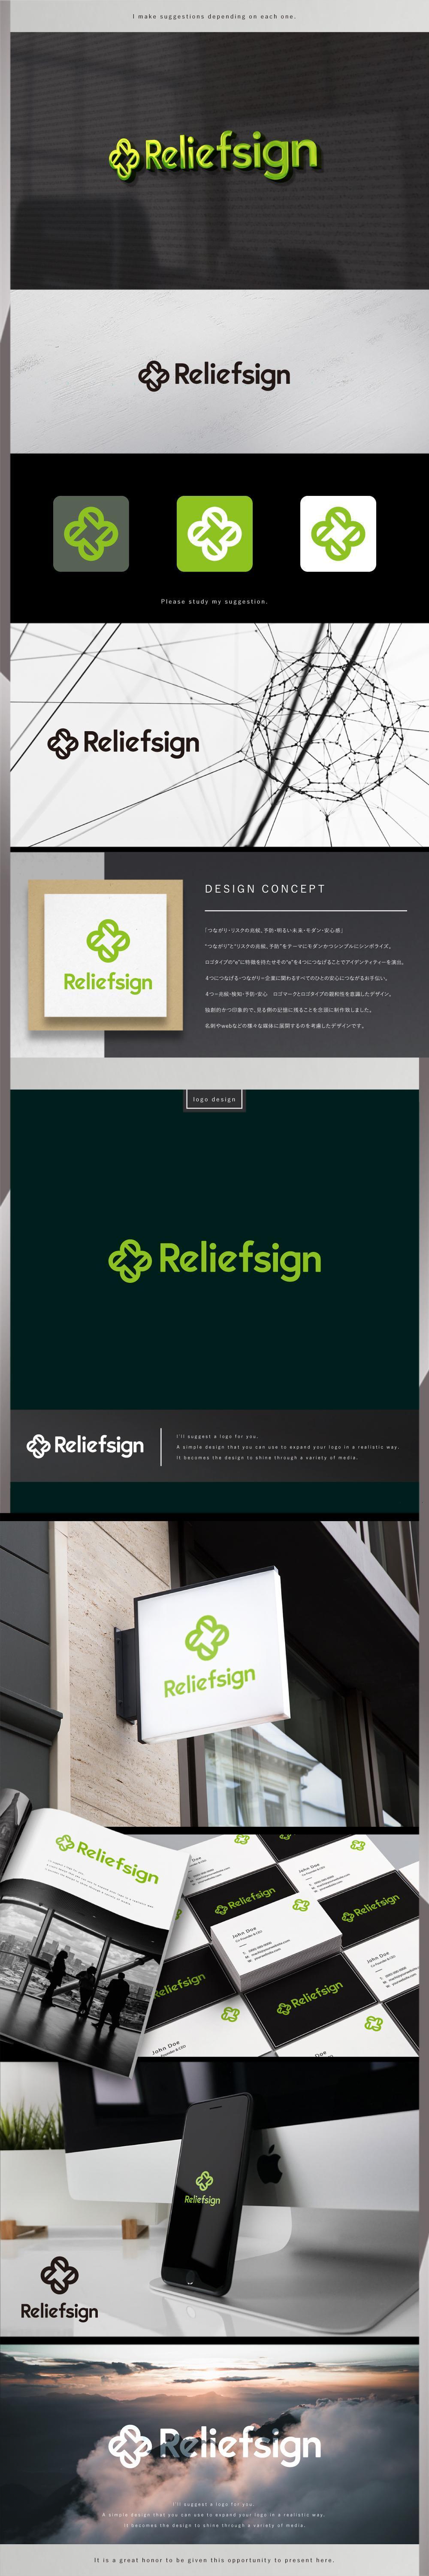 reliefsign_logo_b.jpg